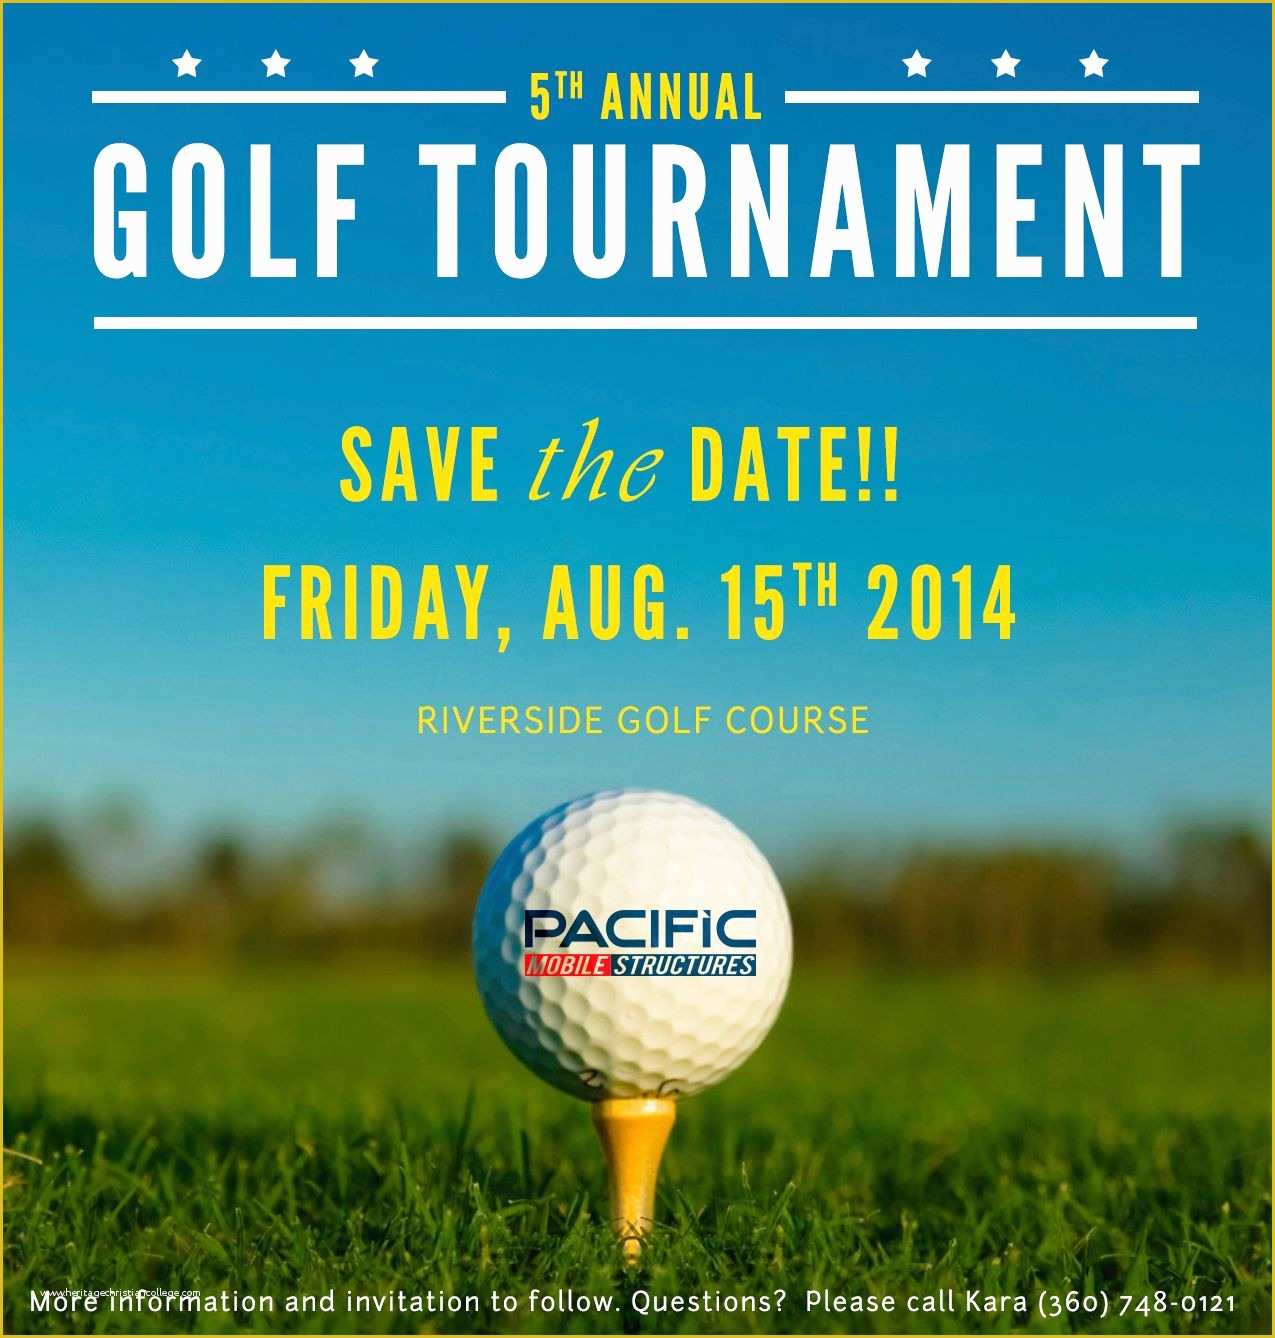 Golf tournament Invitation Template Free Of Save the Date Pmsi Golf tournament 2014